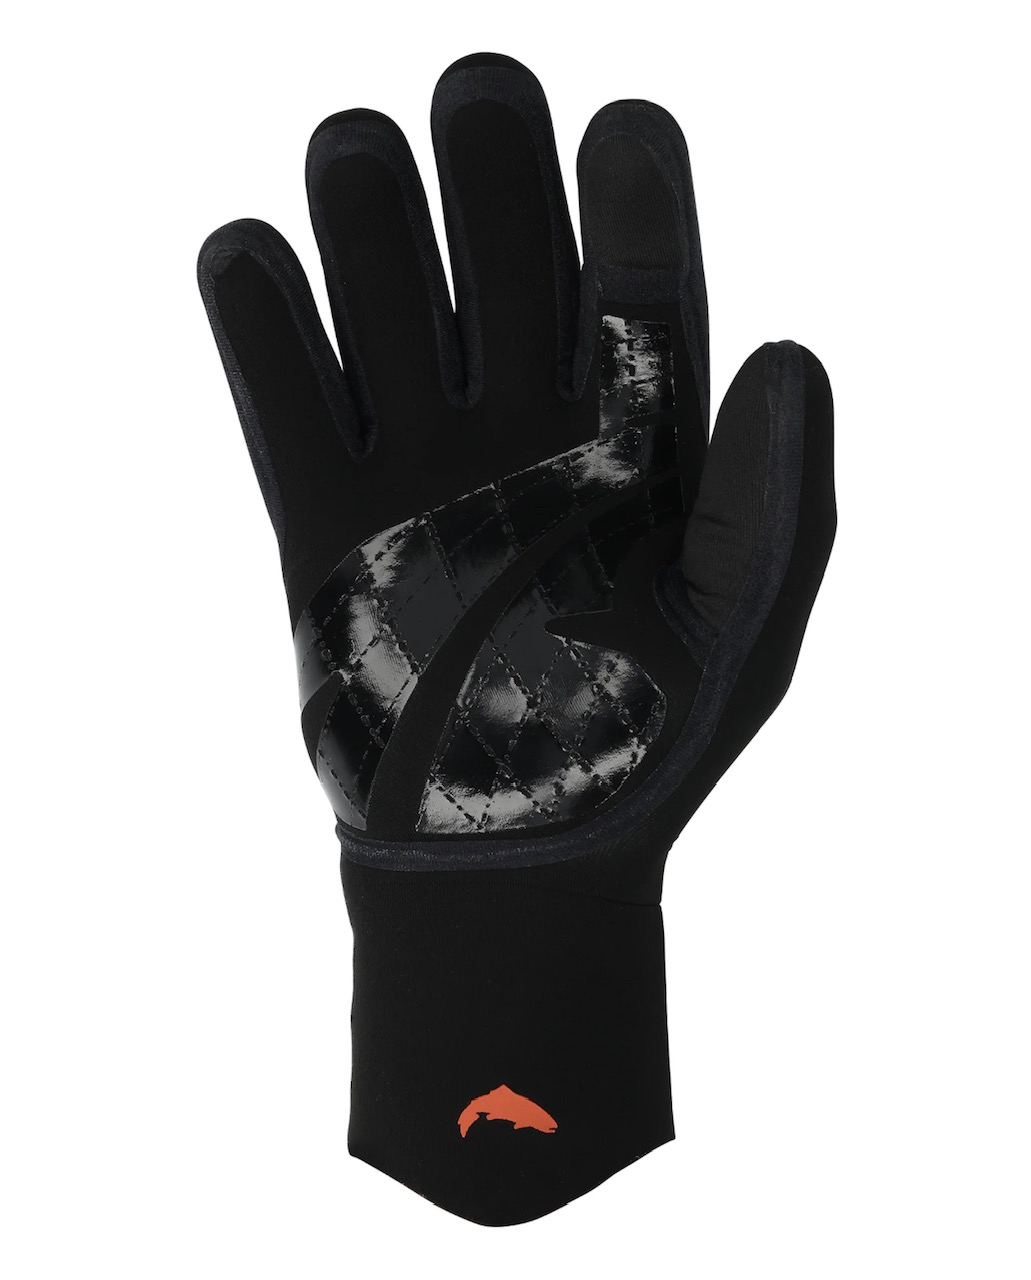 Simms ExStream Neoprene Glove - Black - Small